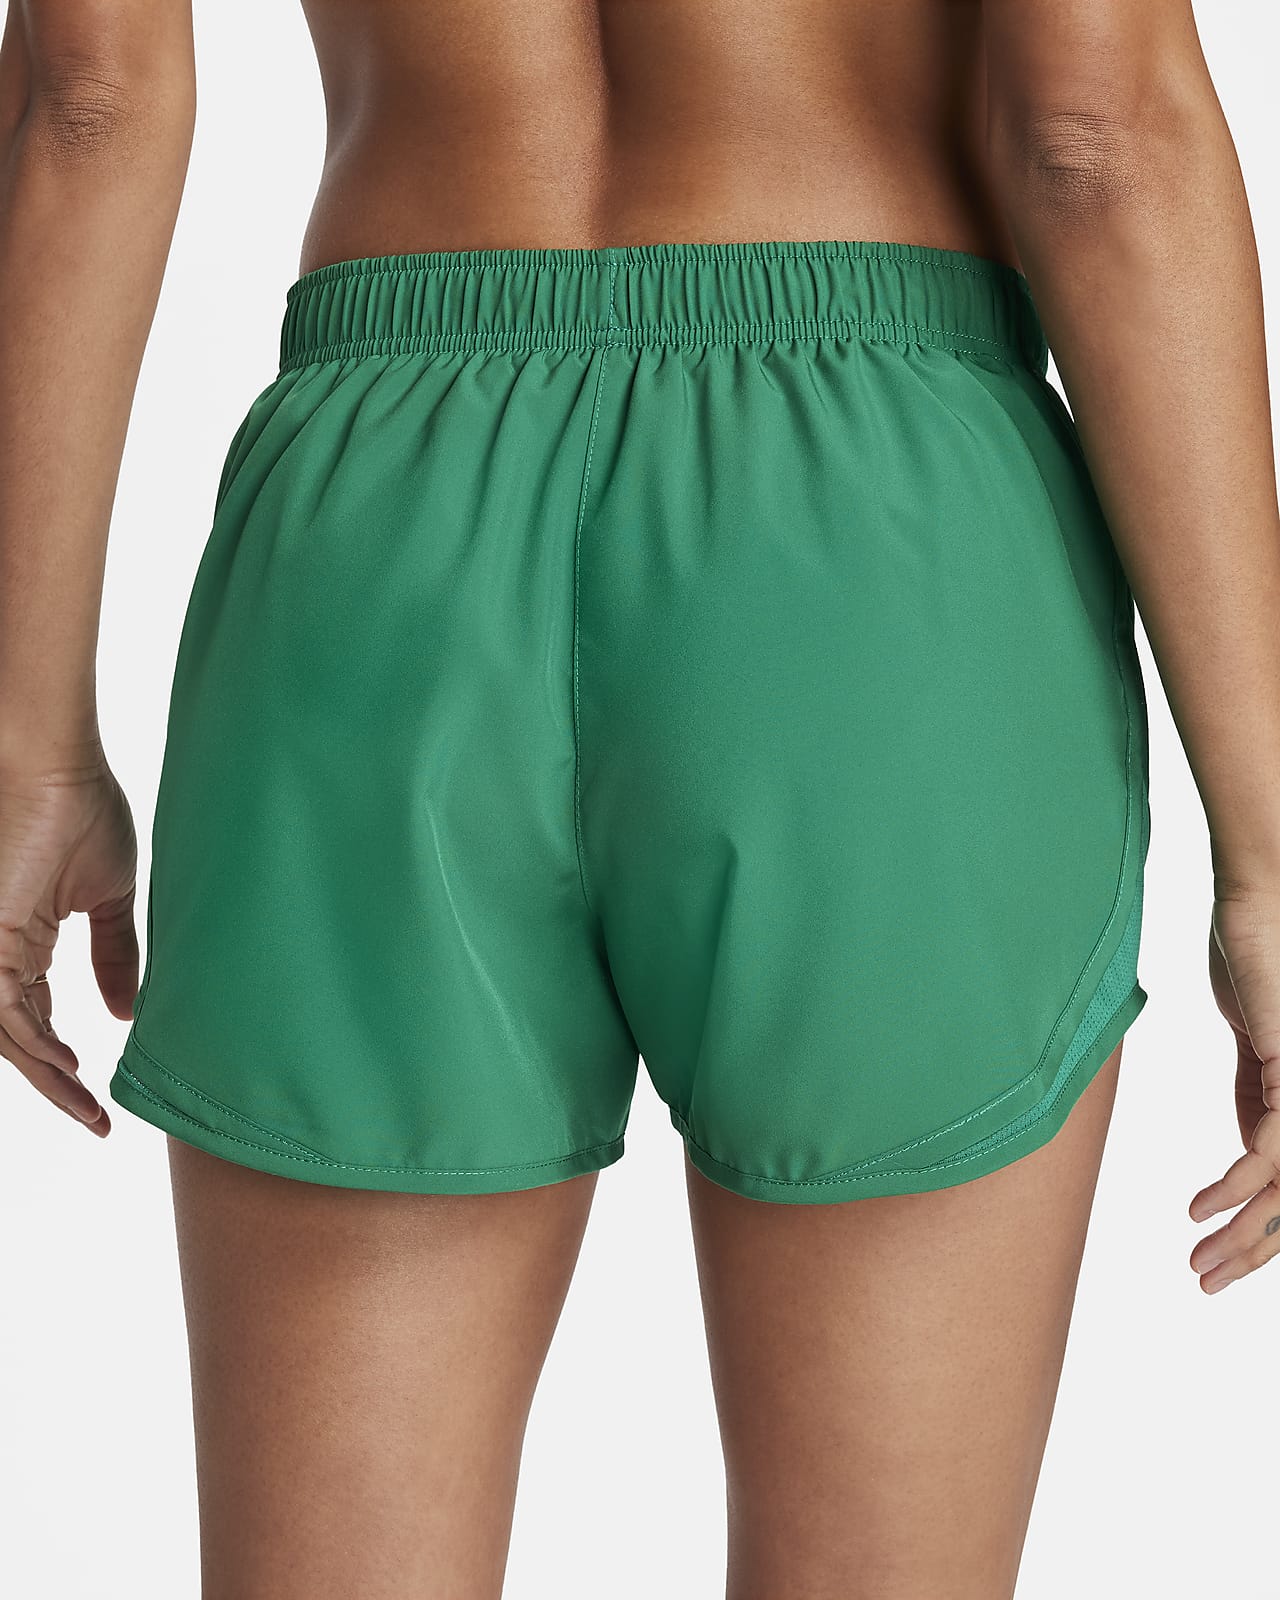 Shorts de running con ropa interior forrada para mujer Nike Tempo